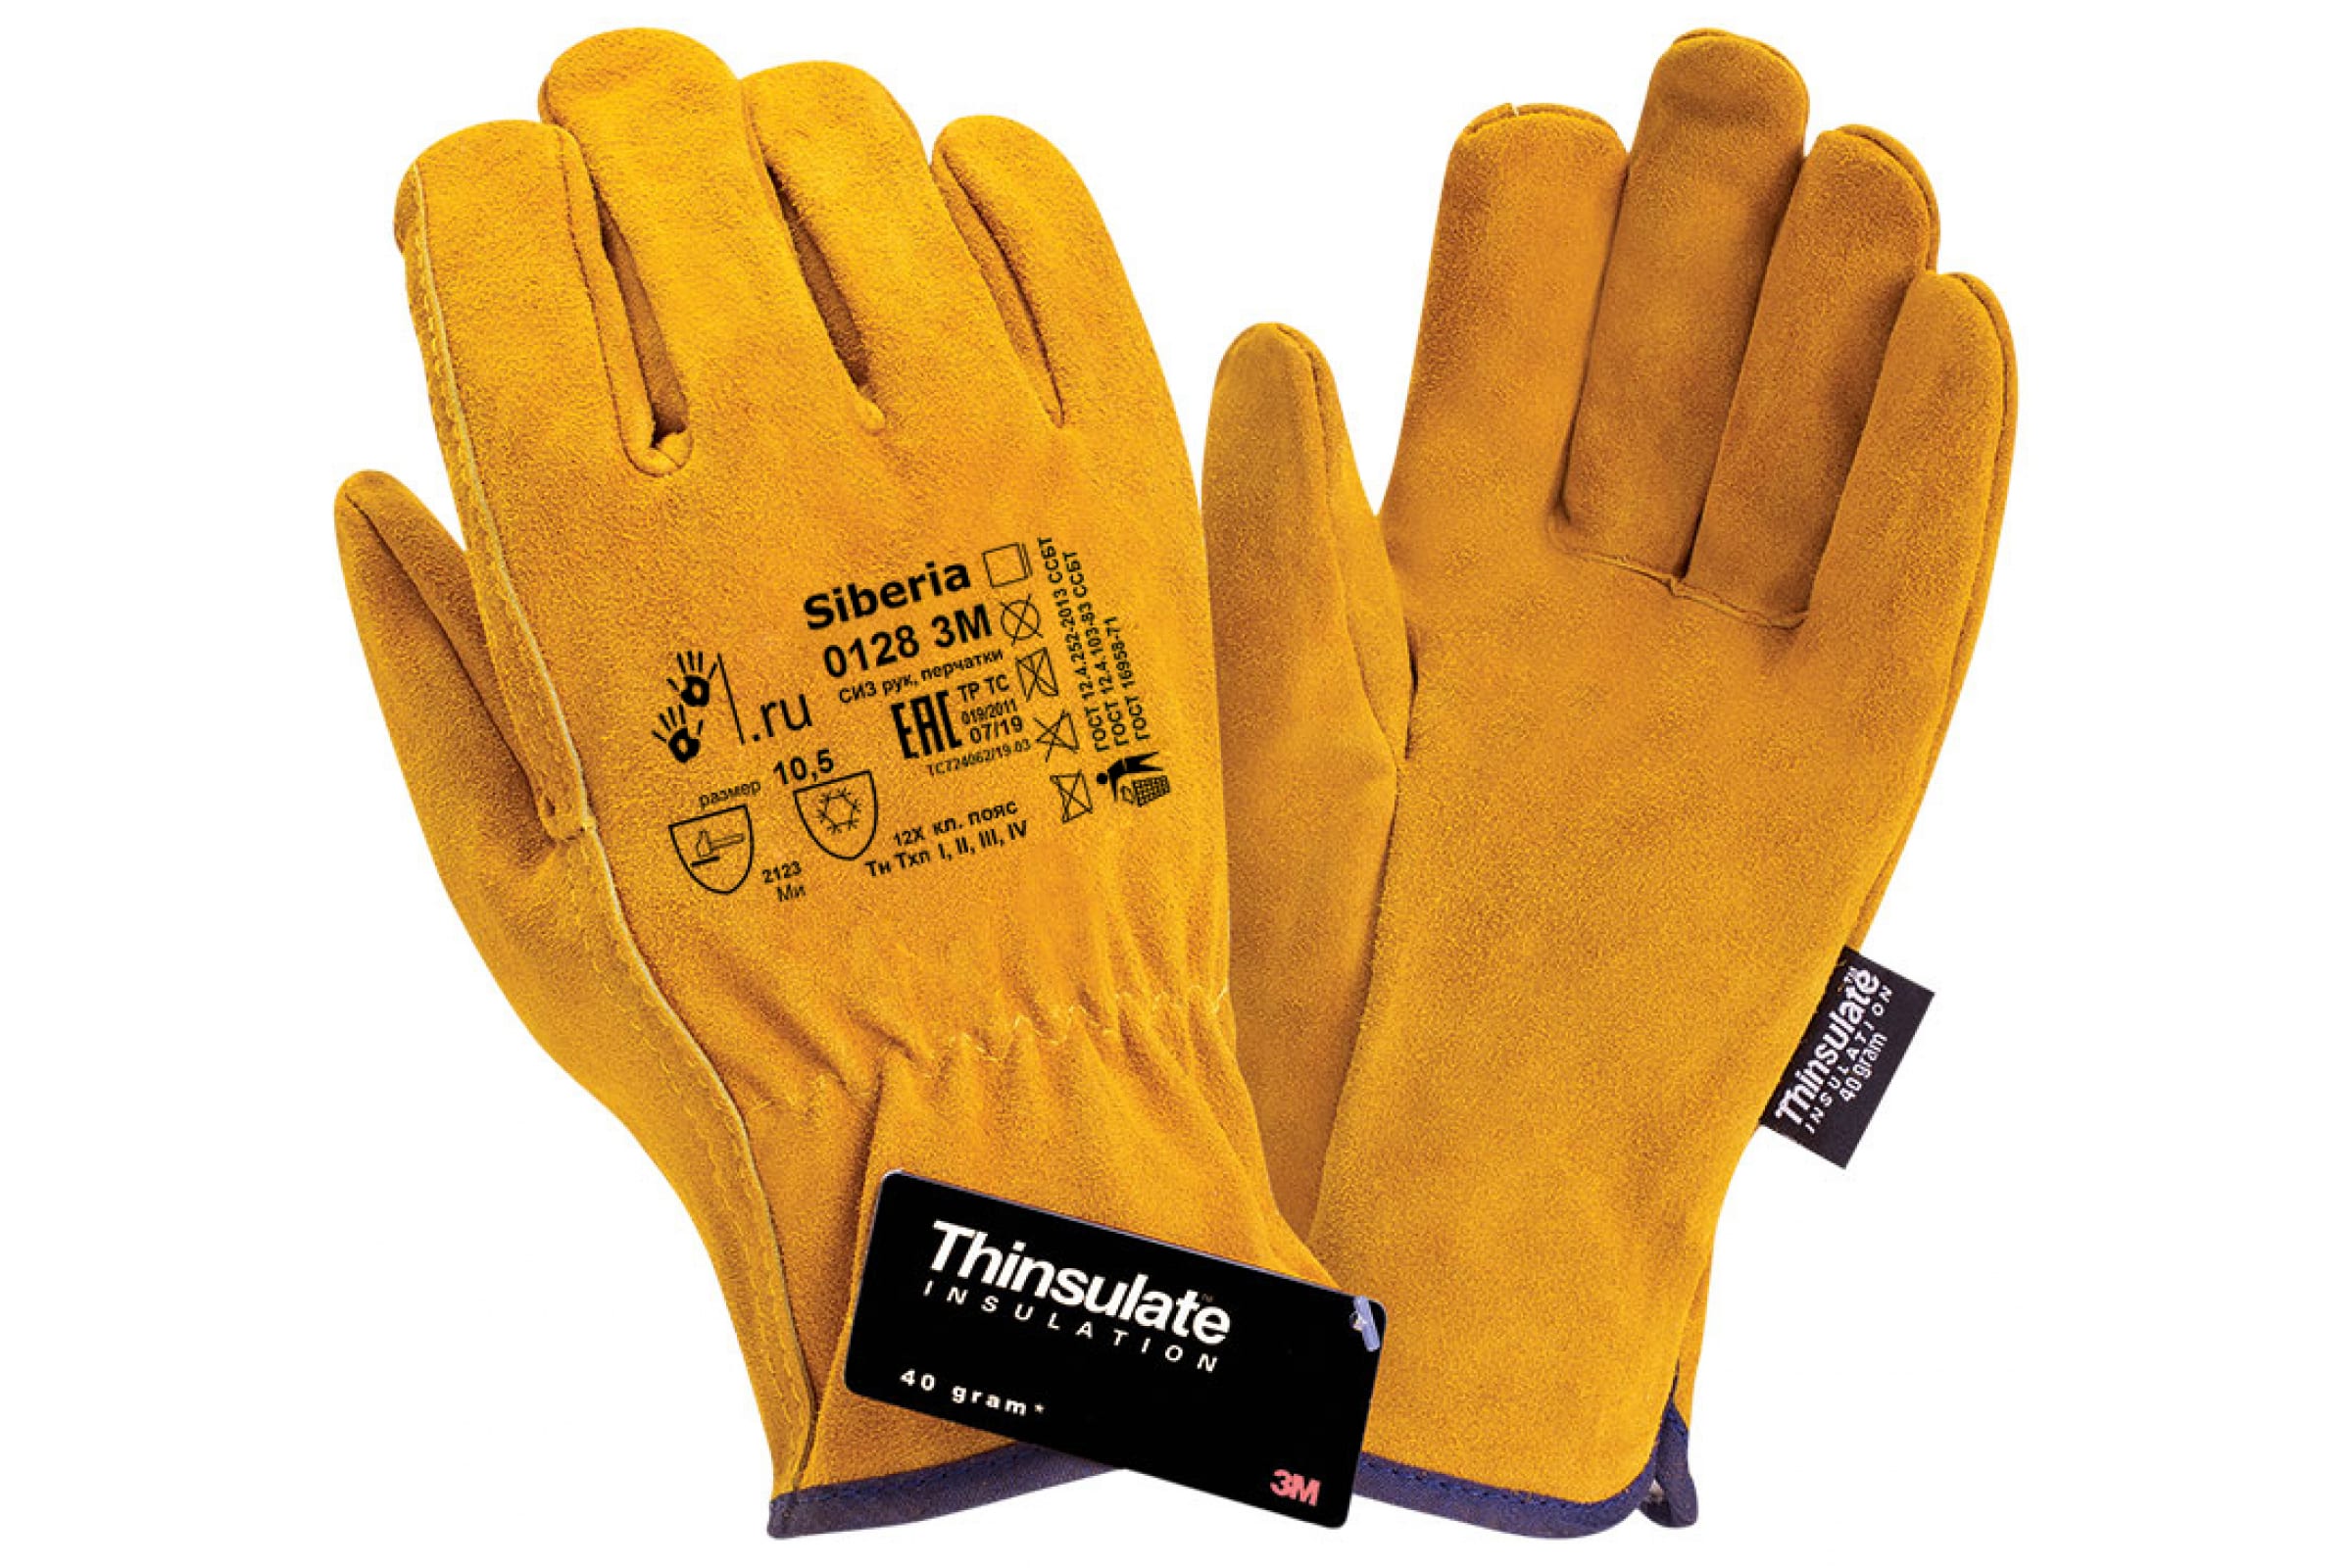 2Hands Перчатки утепленные, спилок КРС/Thinsulate 3М 0128 3M Siberia cпилковые перчатки 2hands